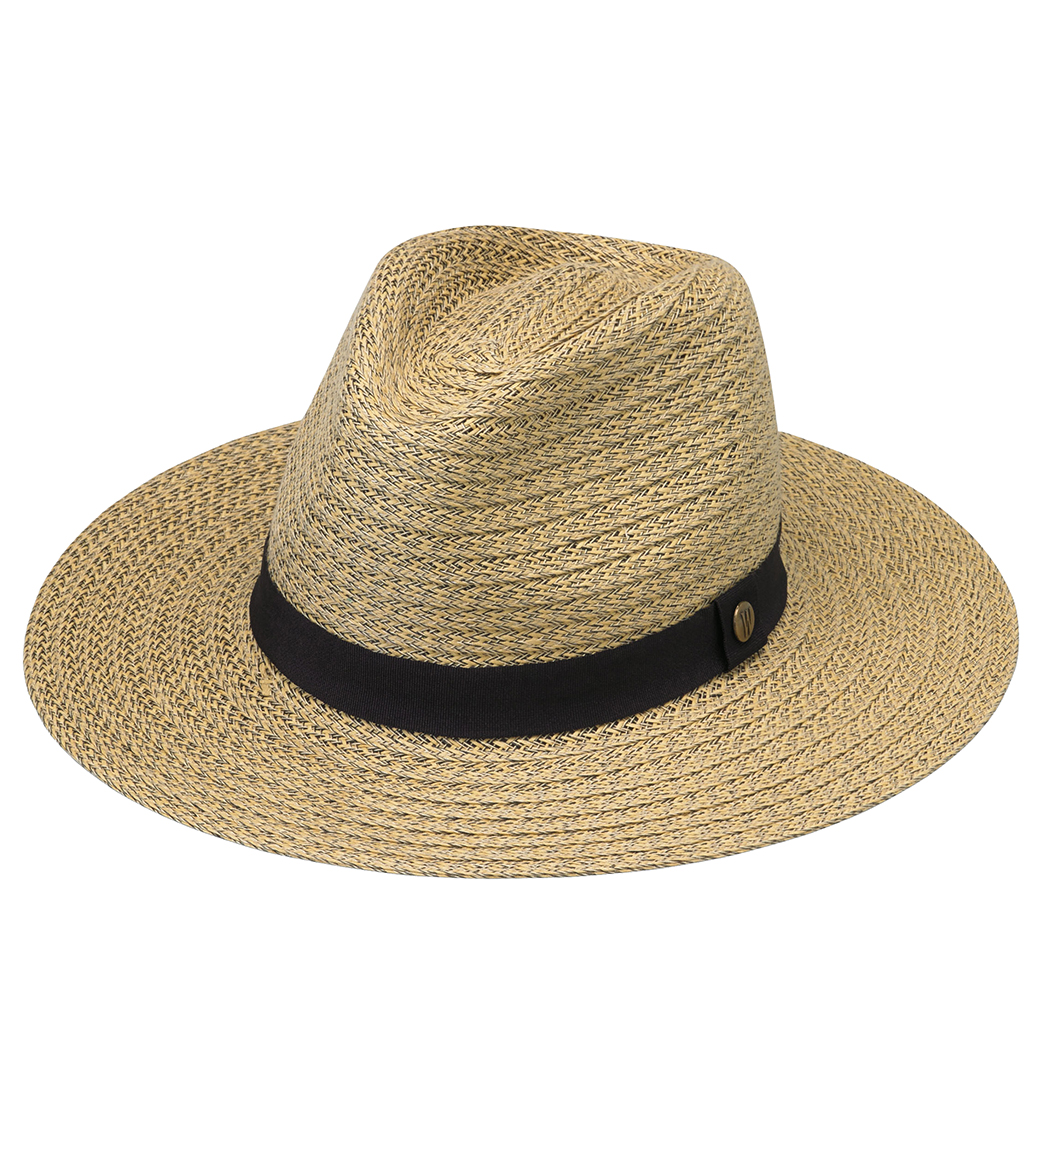 Wallaroo Men's Palmer Sun Hat - Natural/Black Medium/Large - Swimoutlet.com